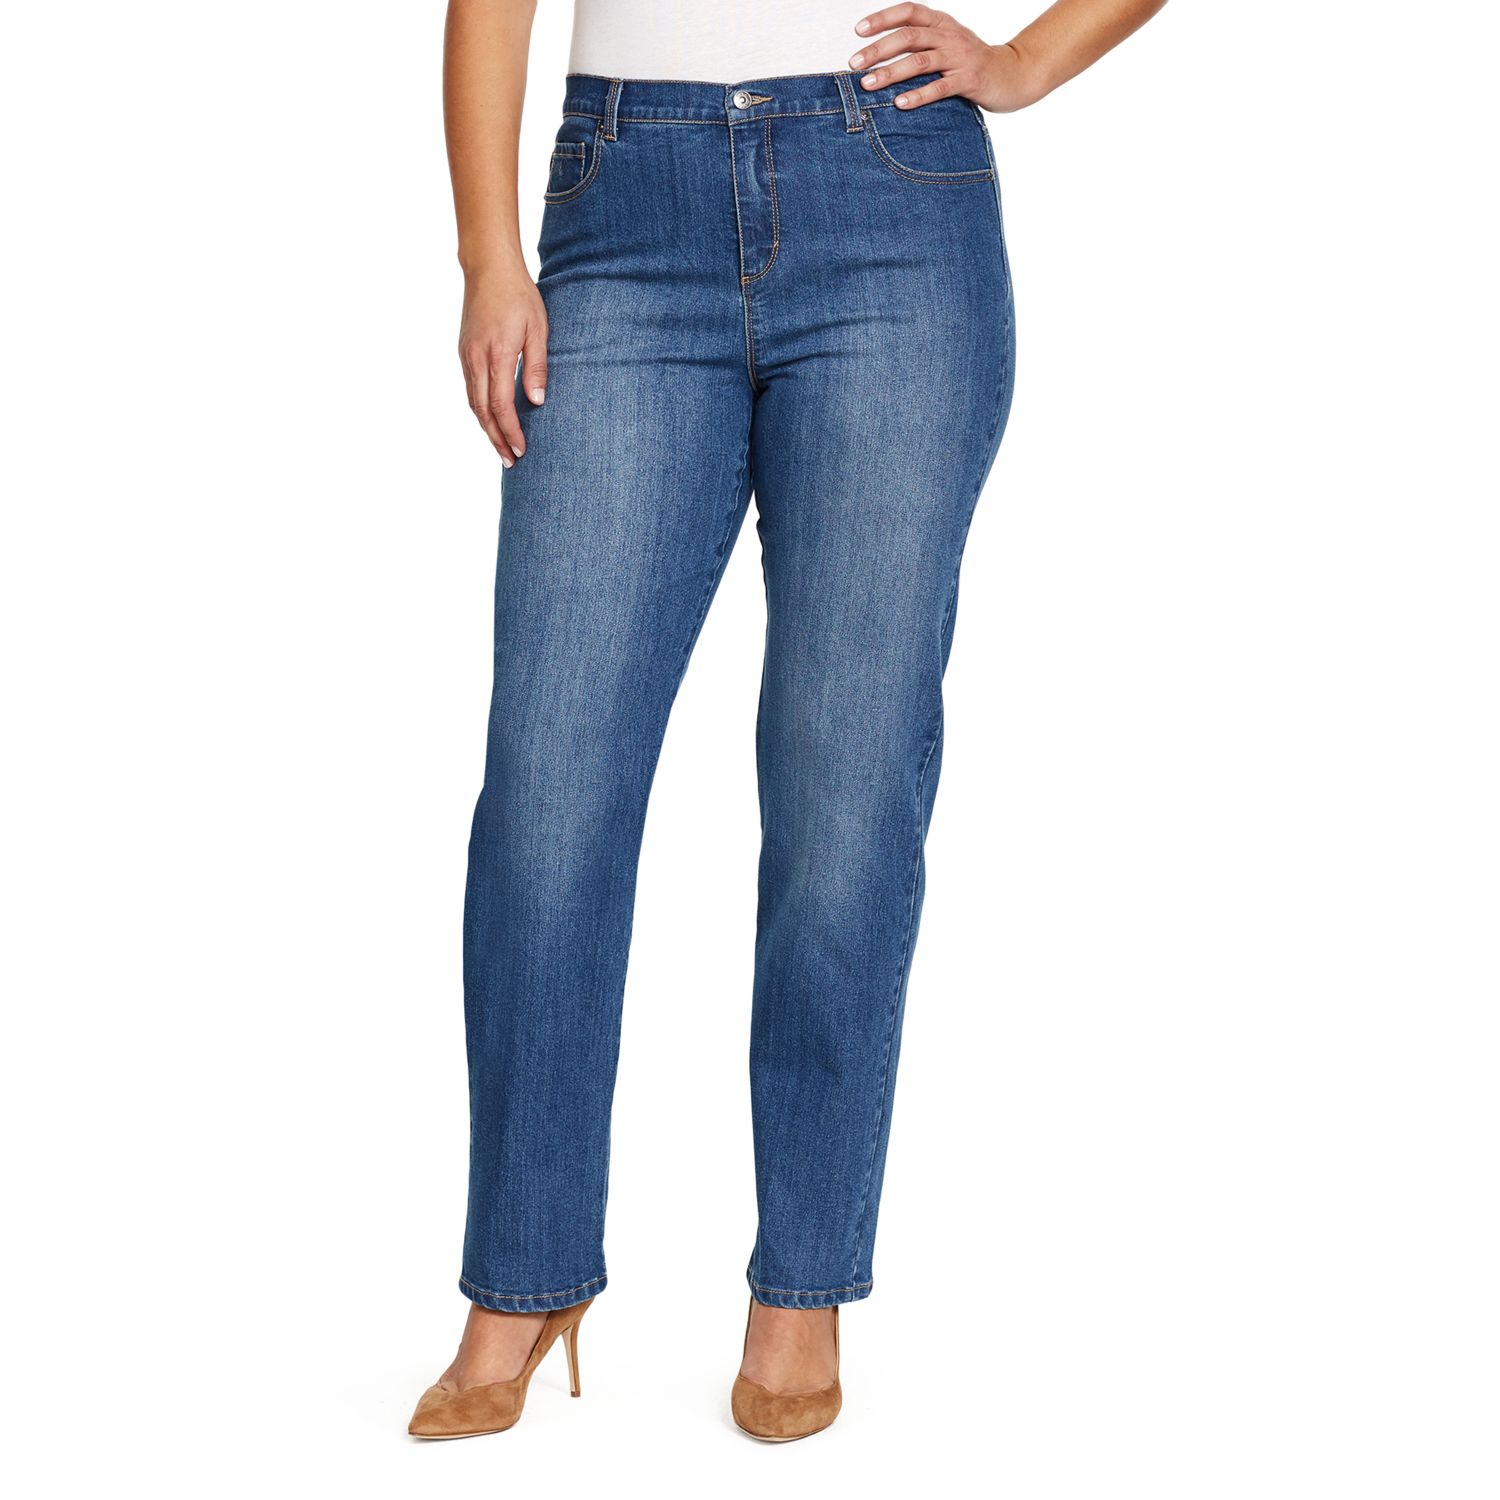 gloria vanderbilt stretch jeans plus size